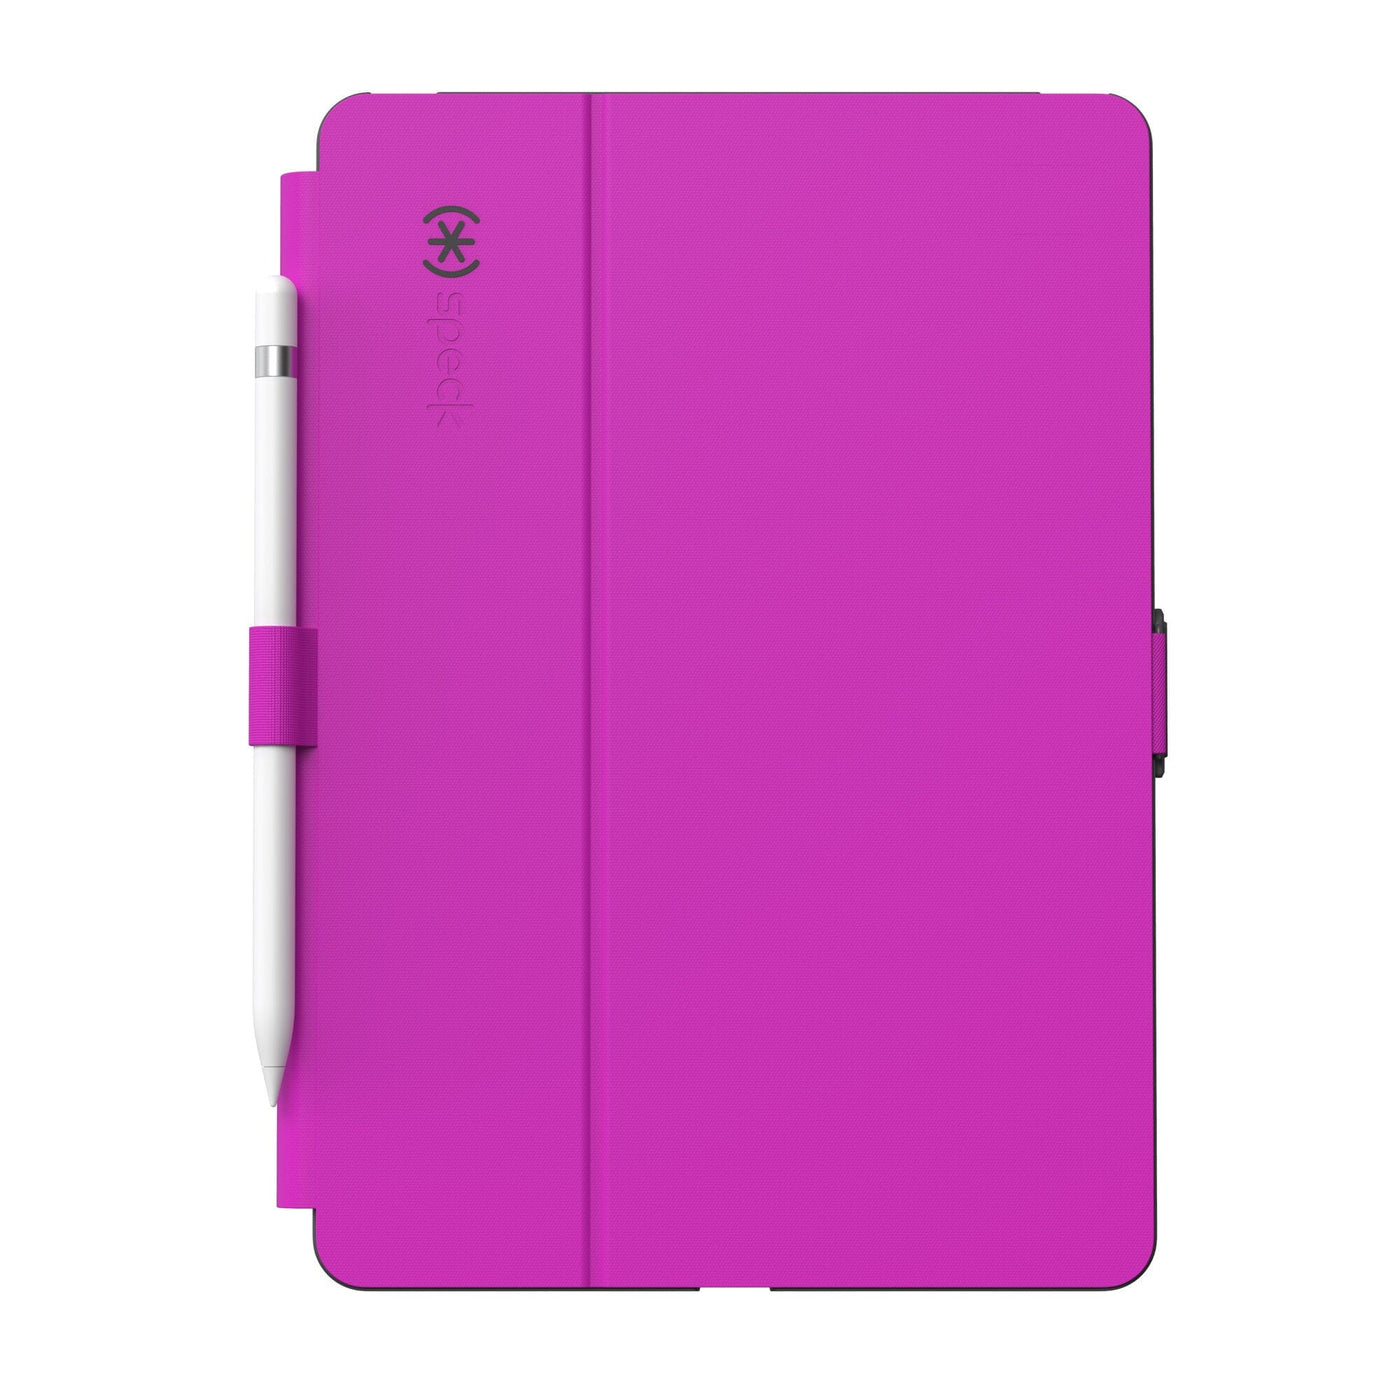 Speck StyleFolio 10.2-inch iPad Cases Best 10.2-inch iPad - $39.99